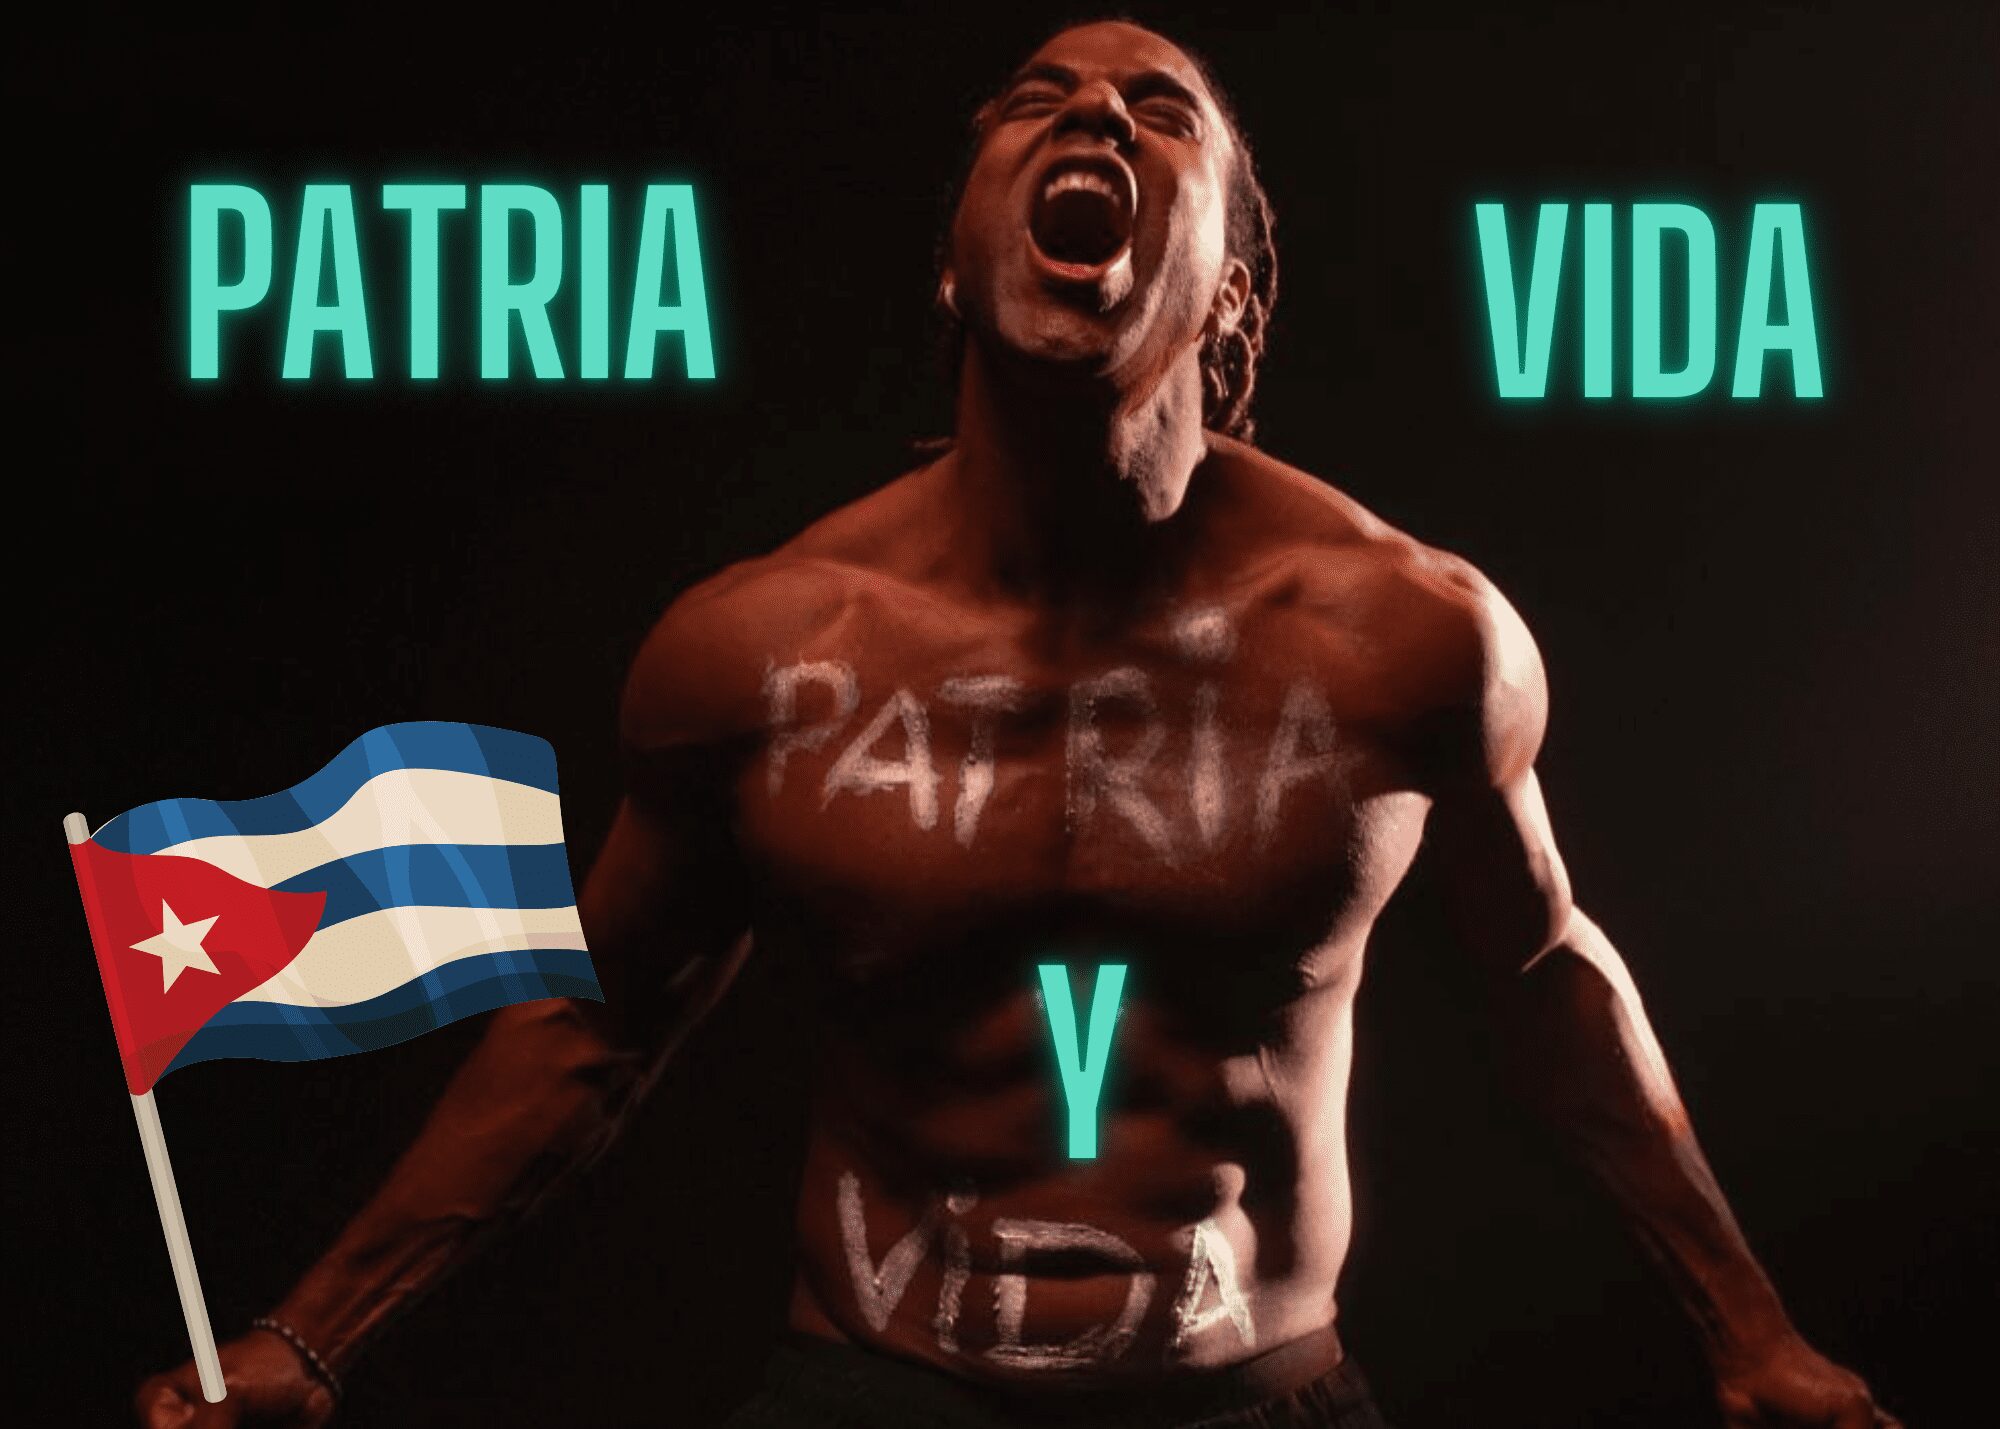 Listen: “Patria y Vida” – Our Translation